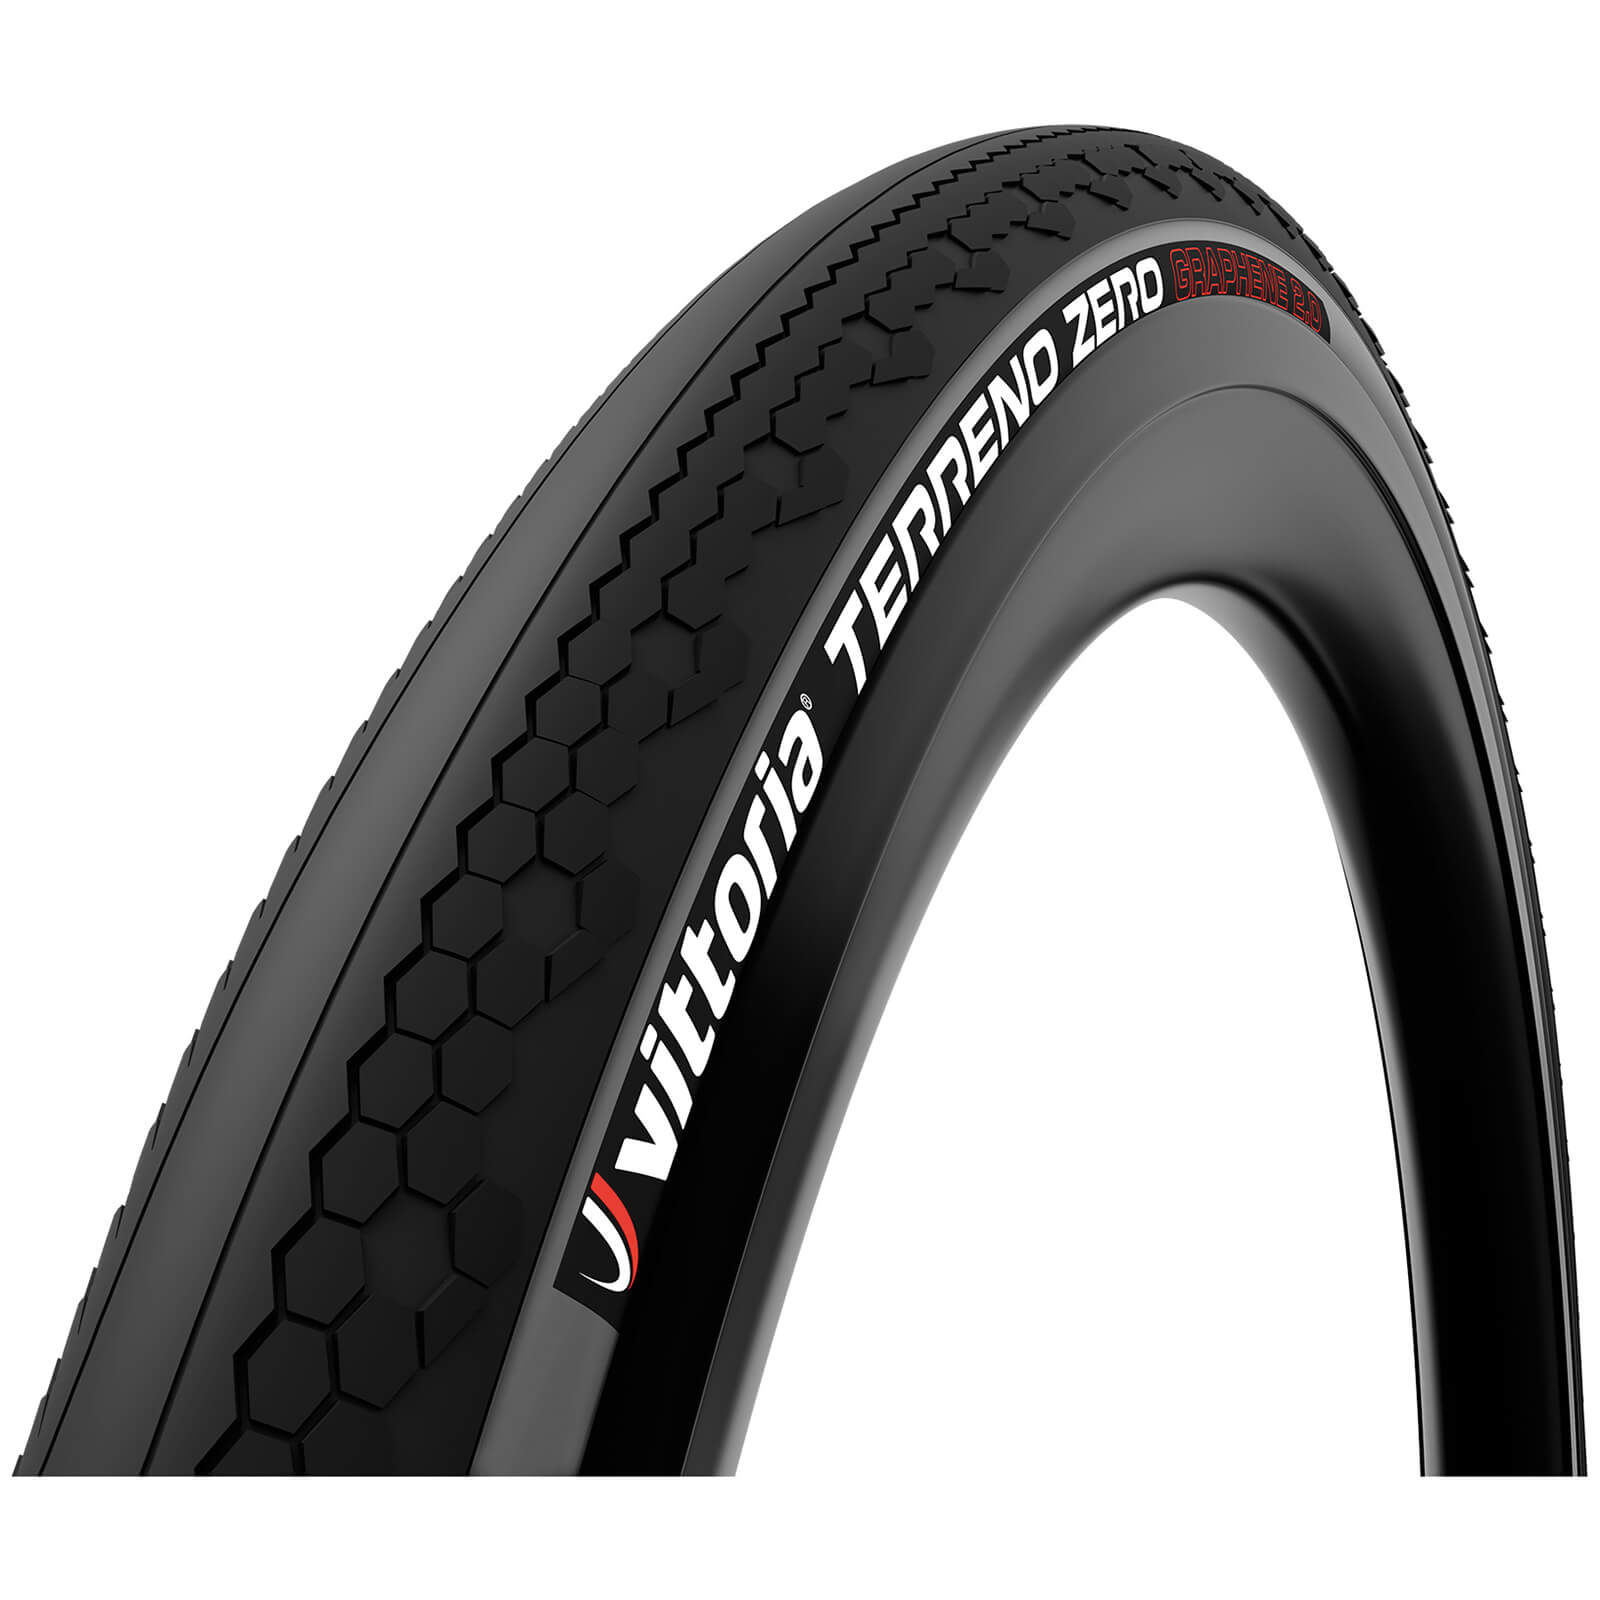 Vittoria Terreno Zero G2.0 Road Tyre - Black Anthracite - 700x32c